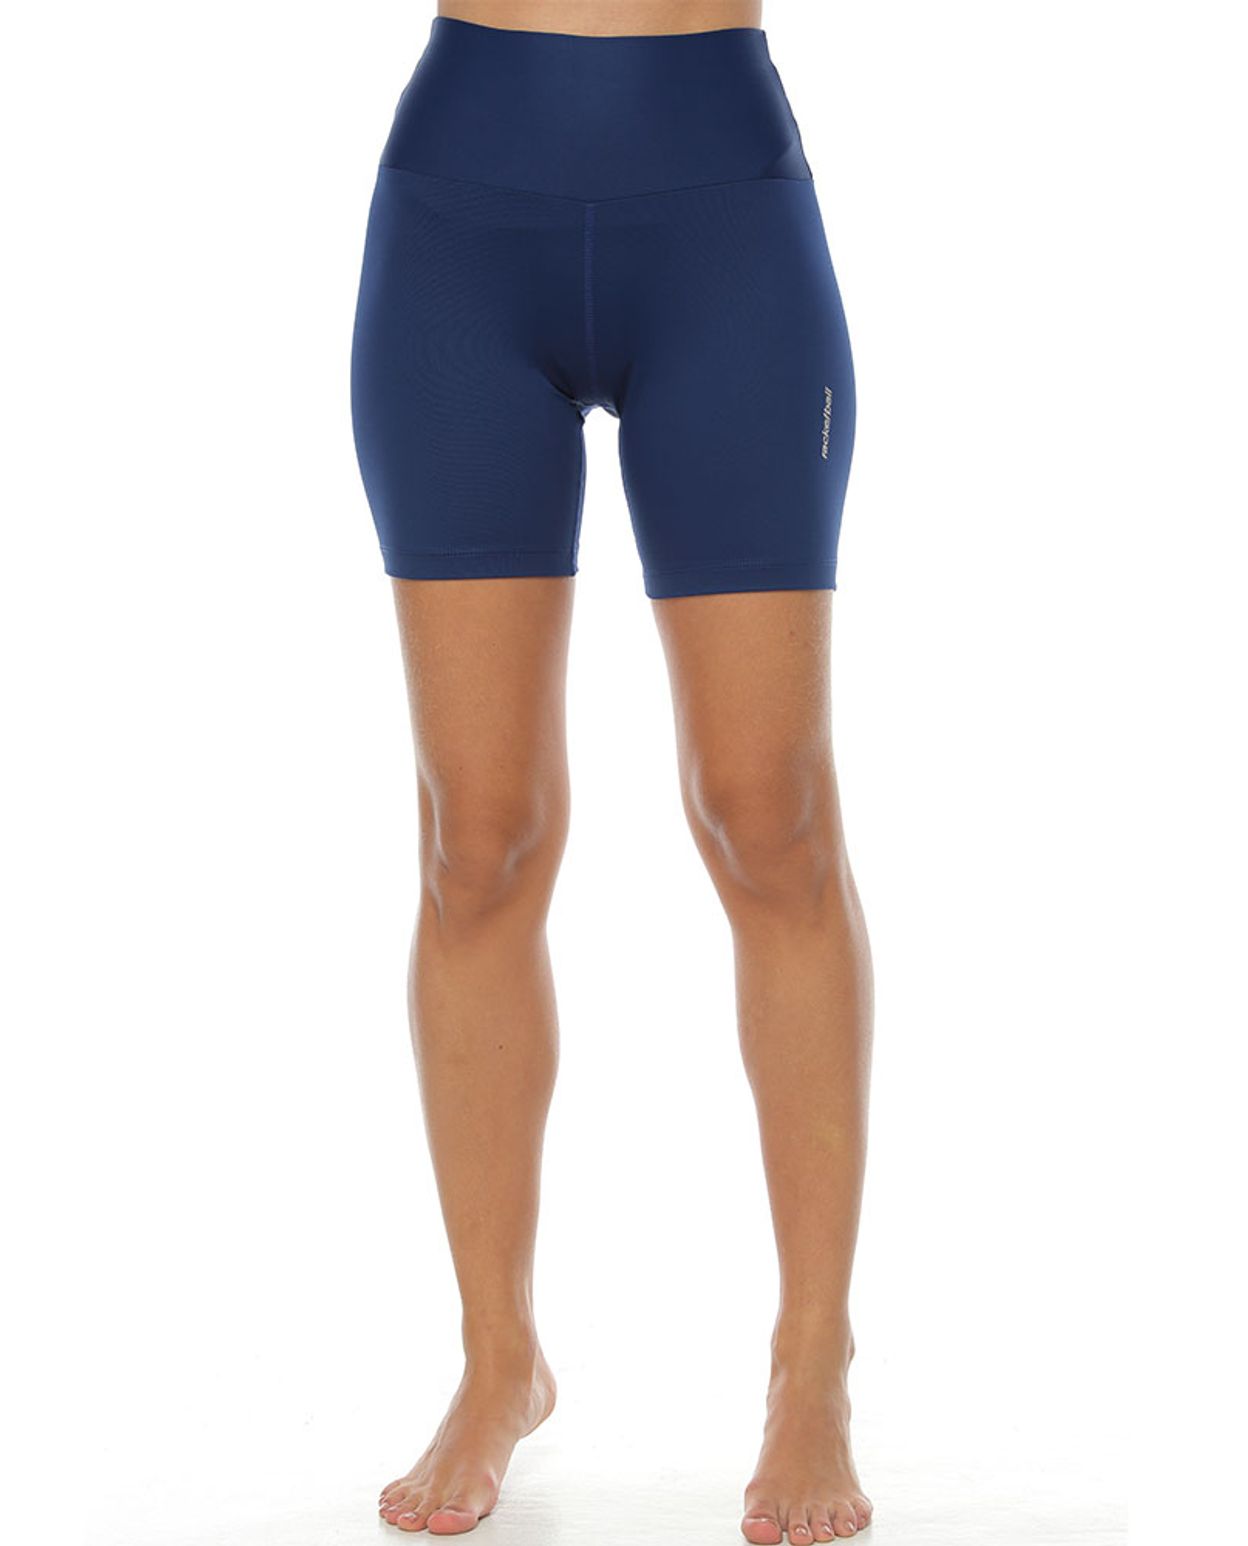 Short Deportivo Mujer, Chico/Mediano, Short de Licra para Mujer de Algodón,  Azul Red Baboon Modelo Spart, Shorts Deportivos para Mujer Licra Flexible.